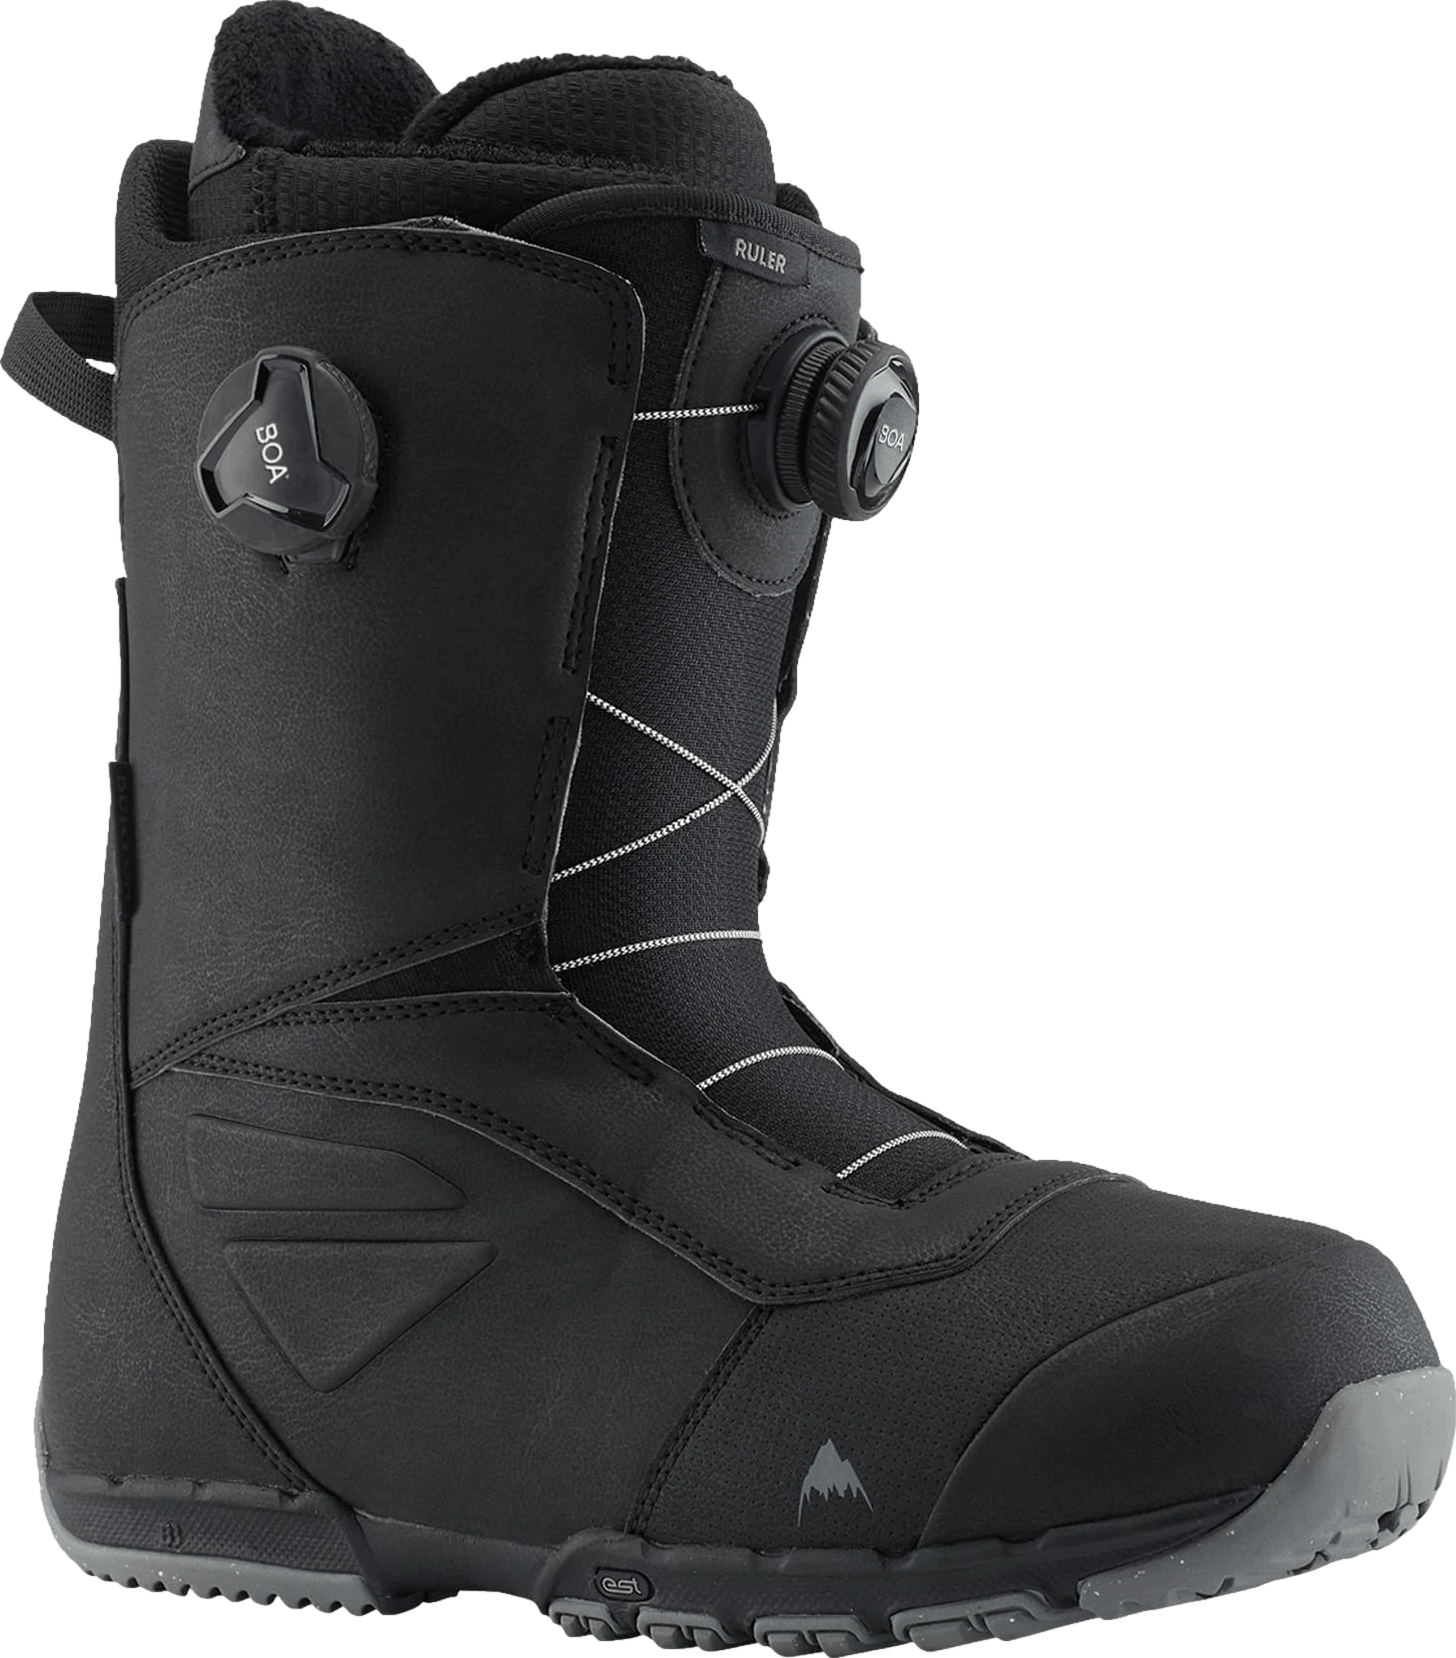 Burton Men's Ruler BOA Snowboard Boots Black